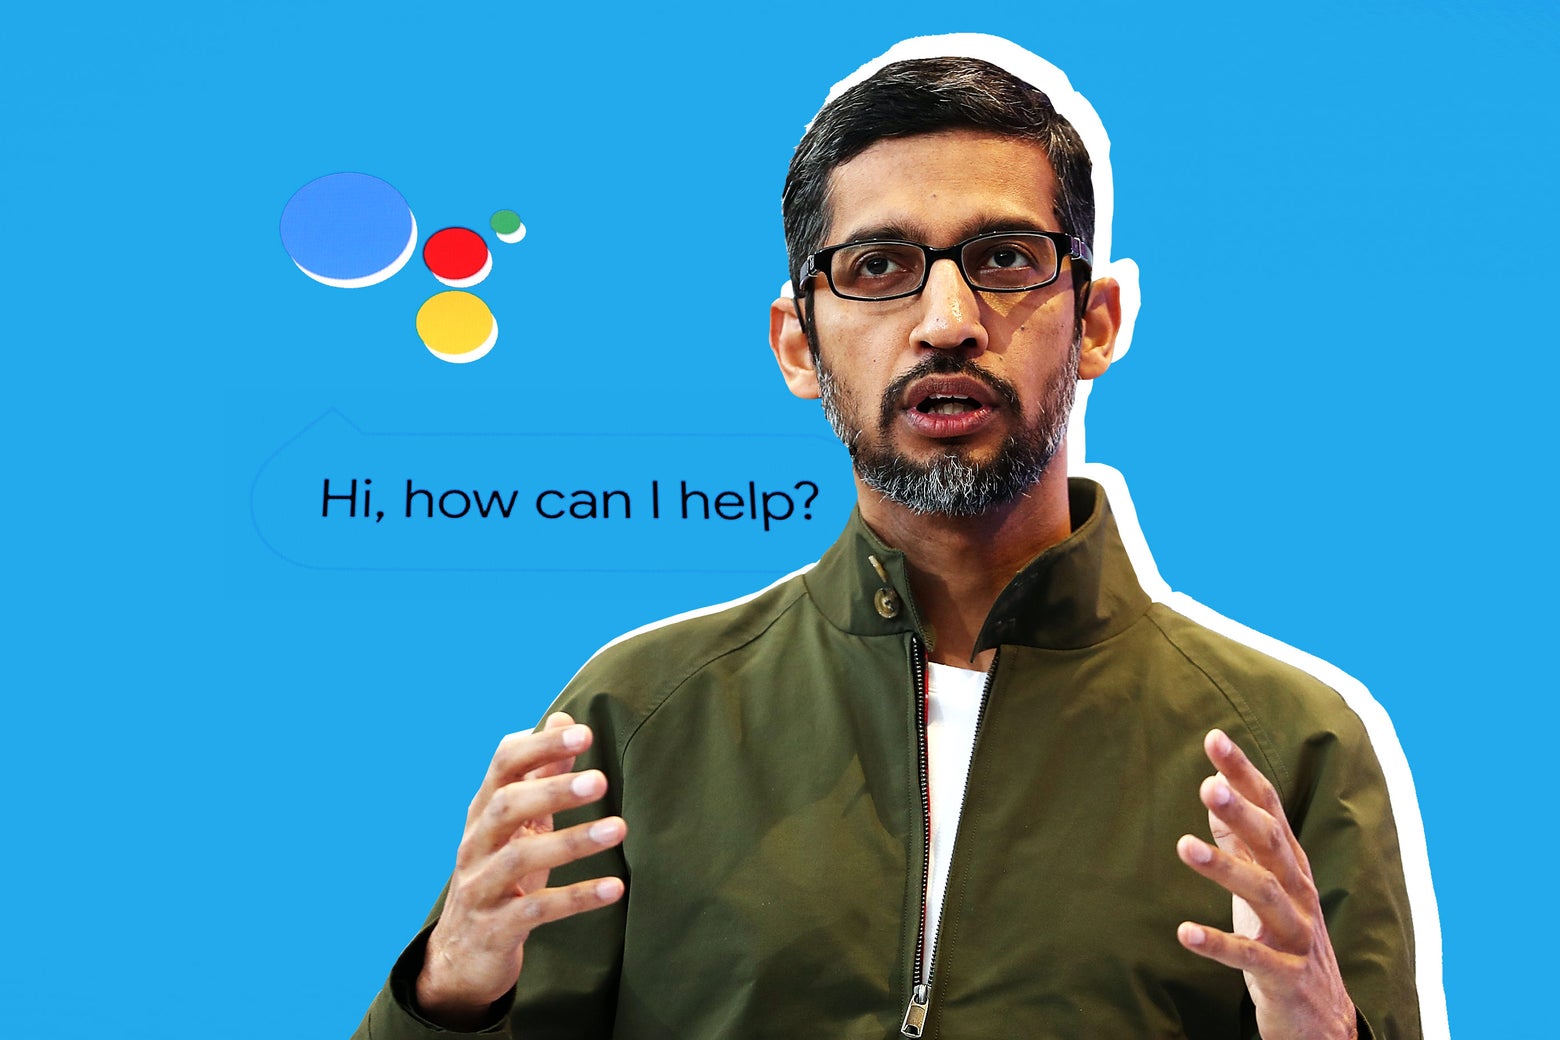 Google's new smart glasses won't make you look like a creepy cyborg